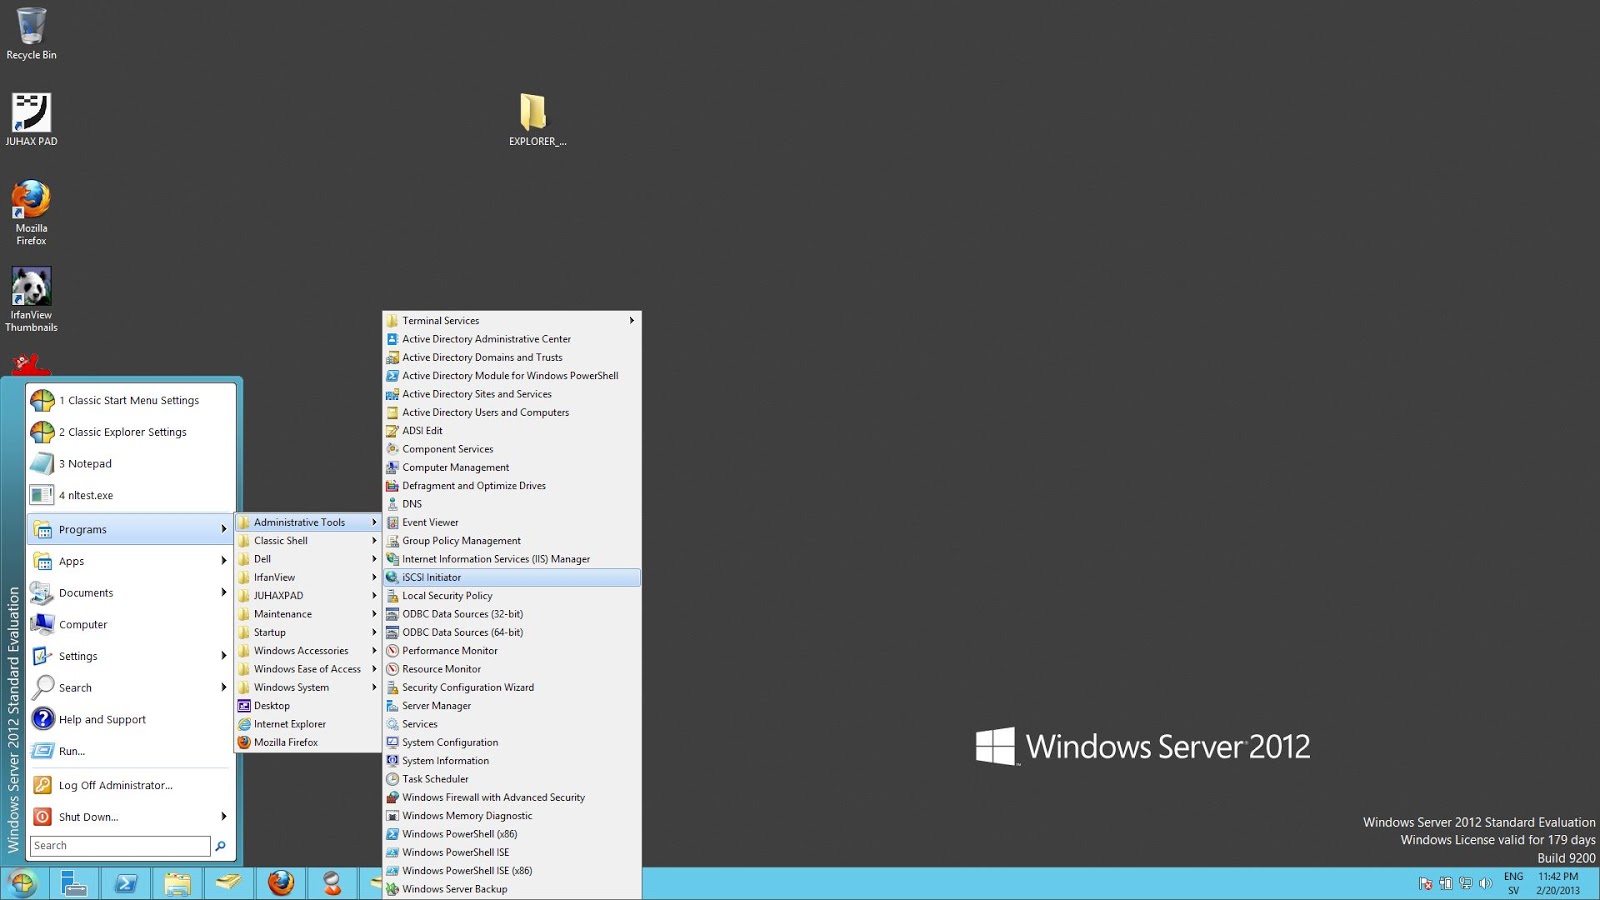 Windows Server 2012 Classic Start Menu